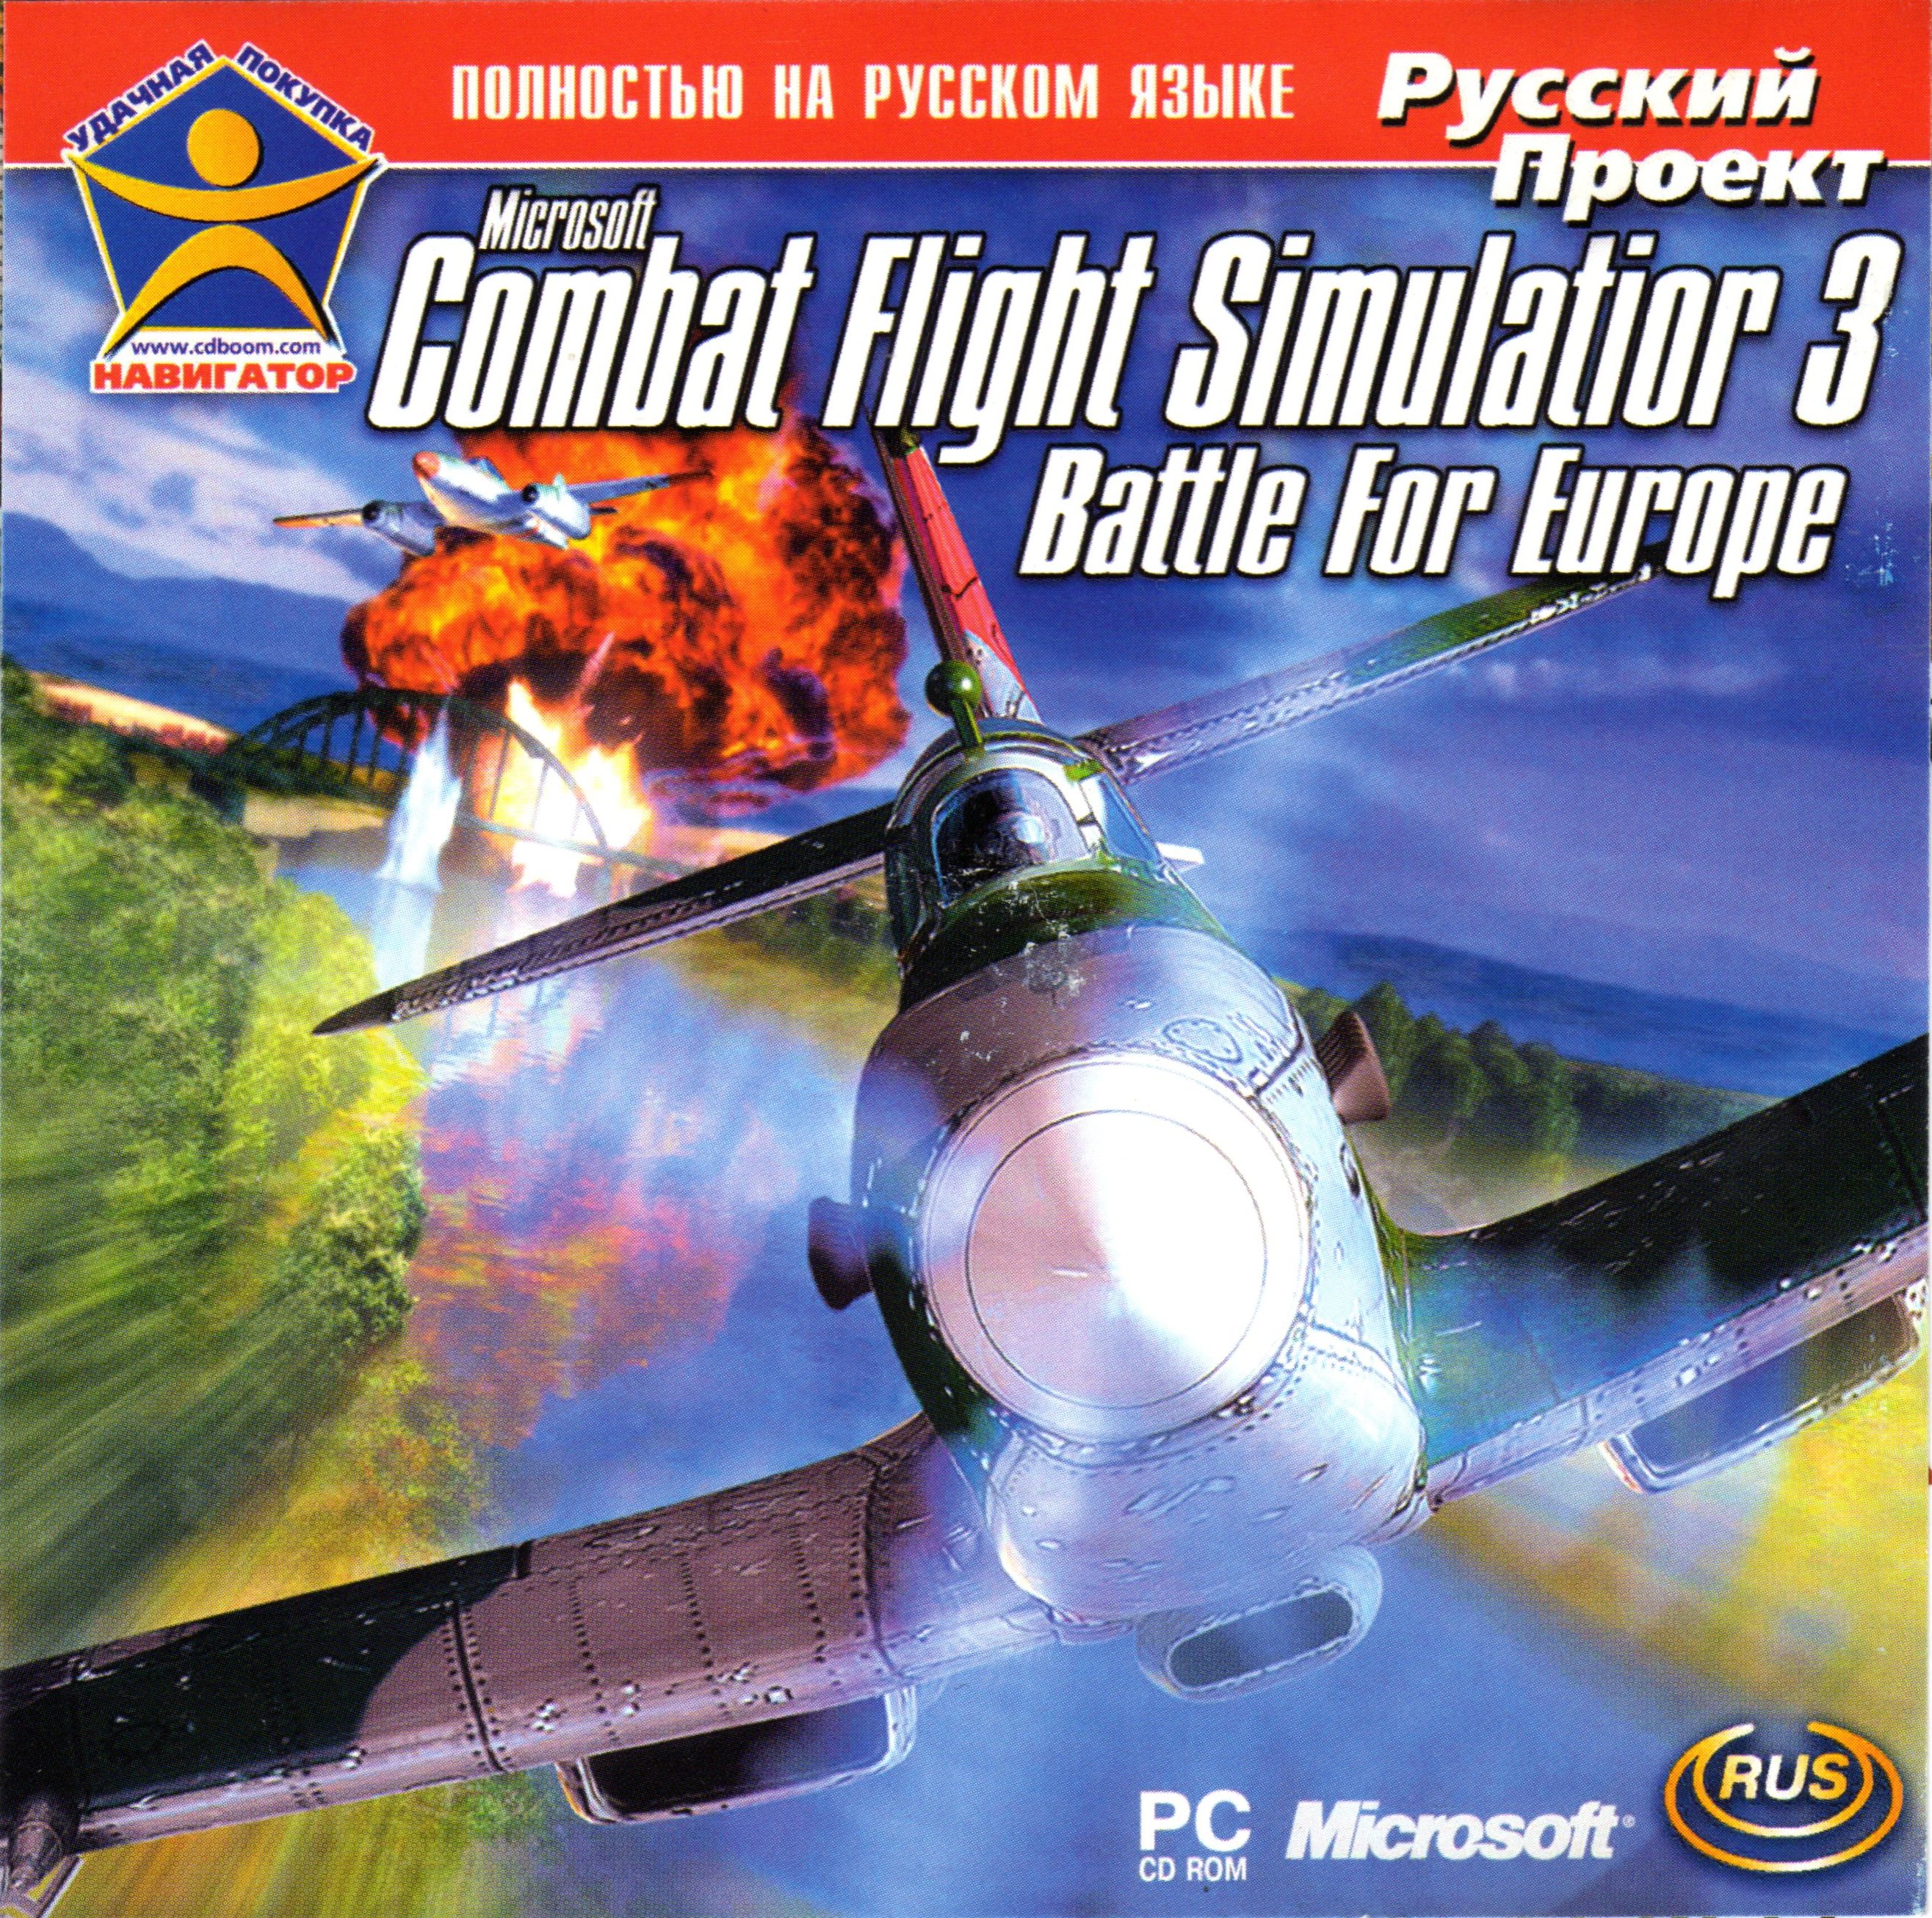 Combat flights. Microsoft Combat Flight Simulator 3 Battle for Europe. Battle for Europe Combat Flight. Combat Flight Simulator 3. Combat Flight Simulator WWII Europe Series.